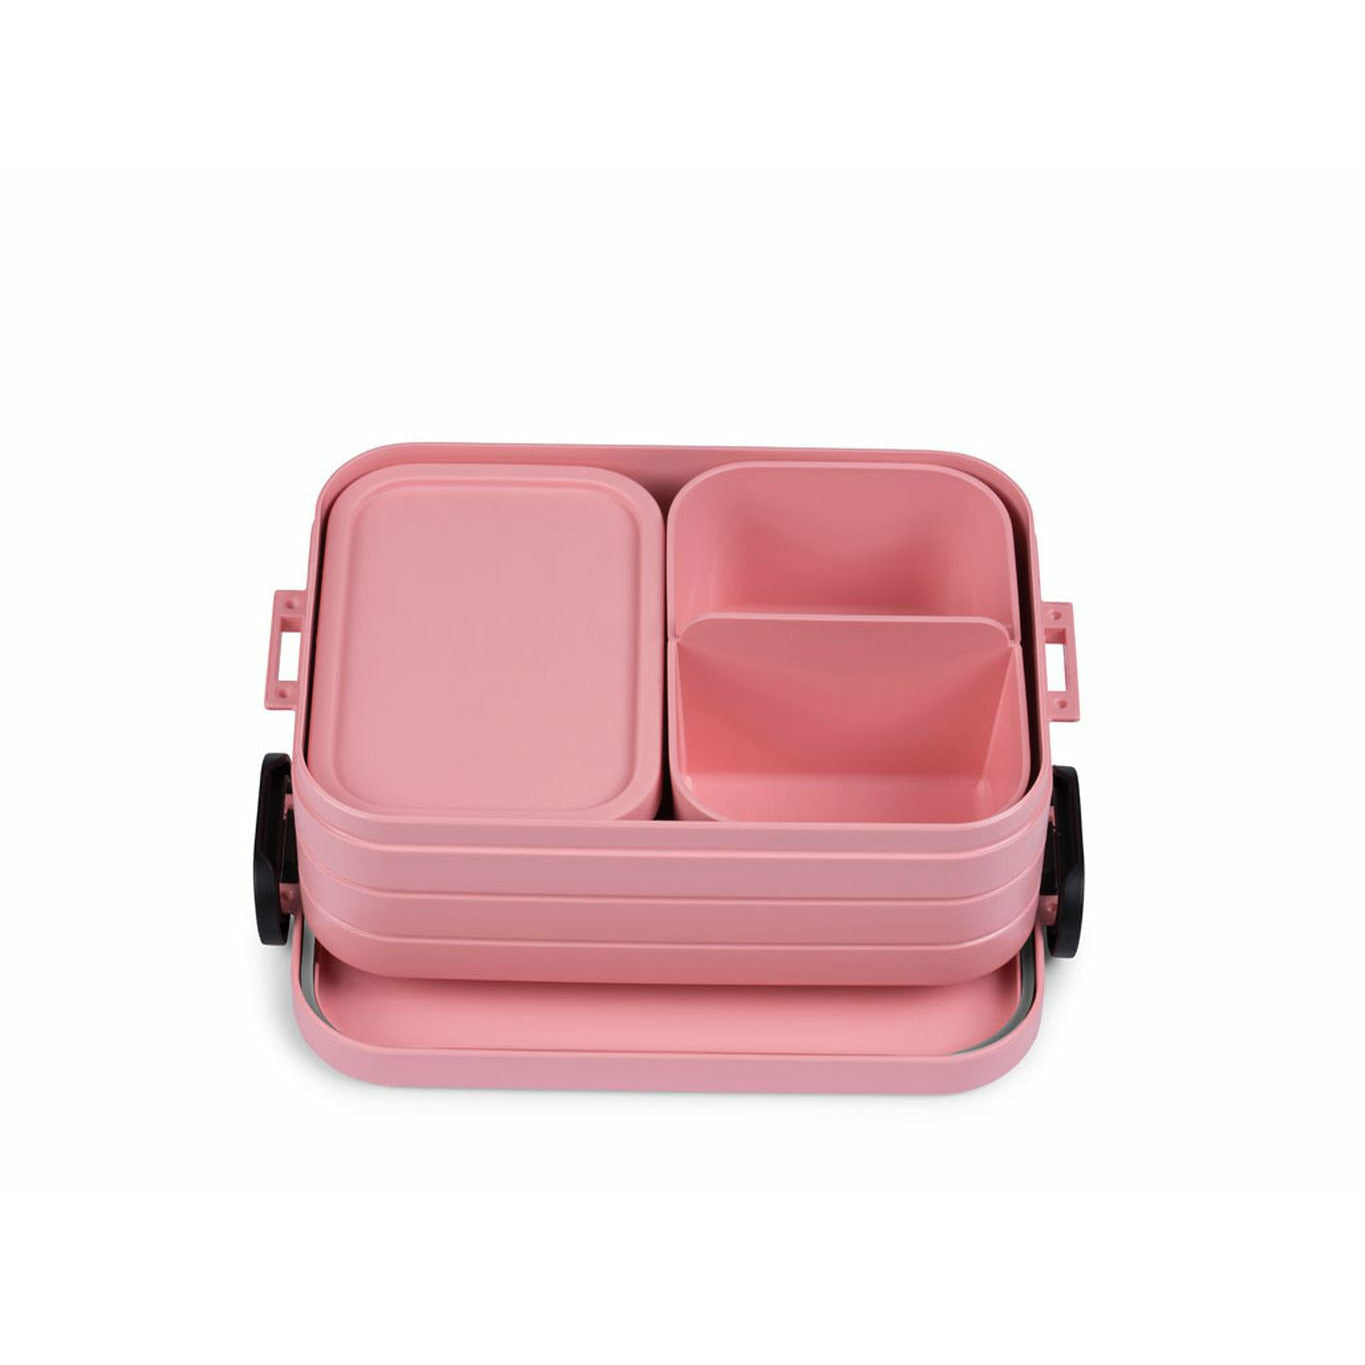 Mepal Bento Take A Break Lunchbox Medium, Nordic Blush